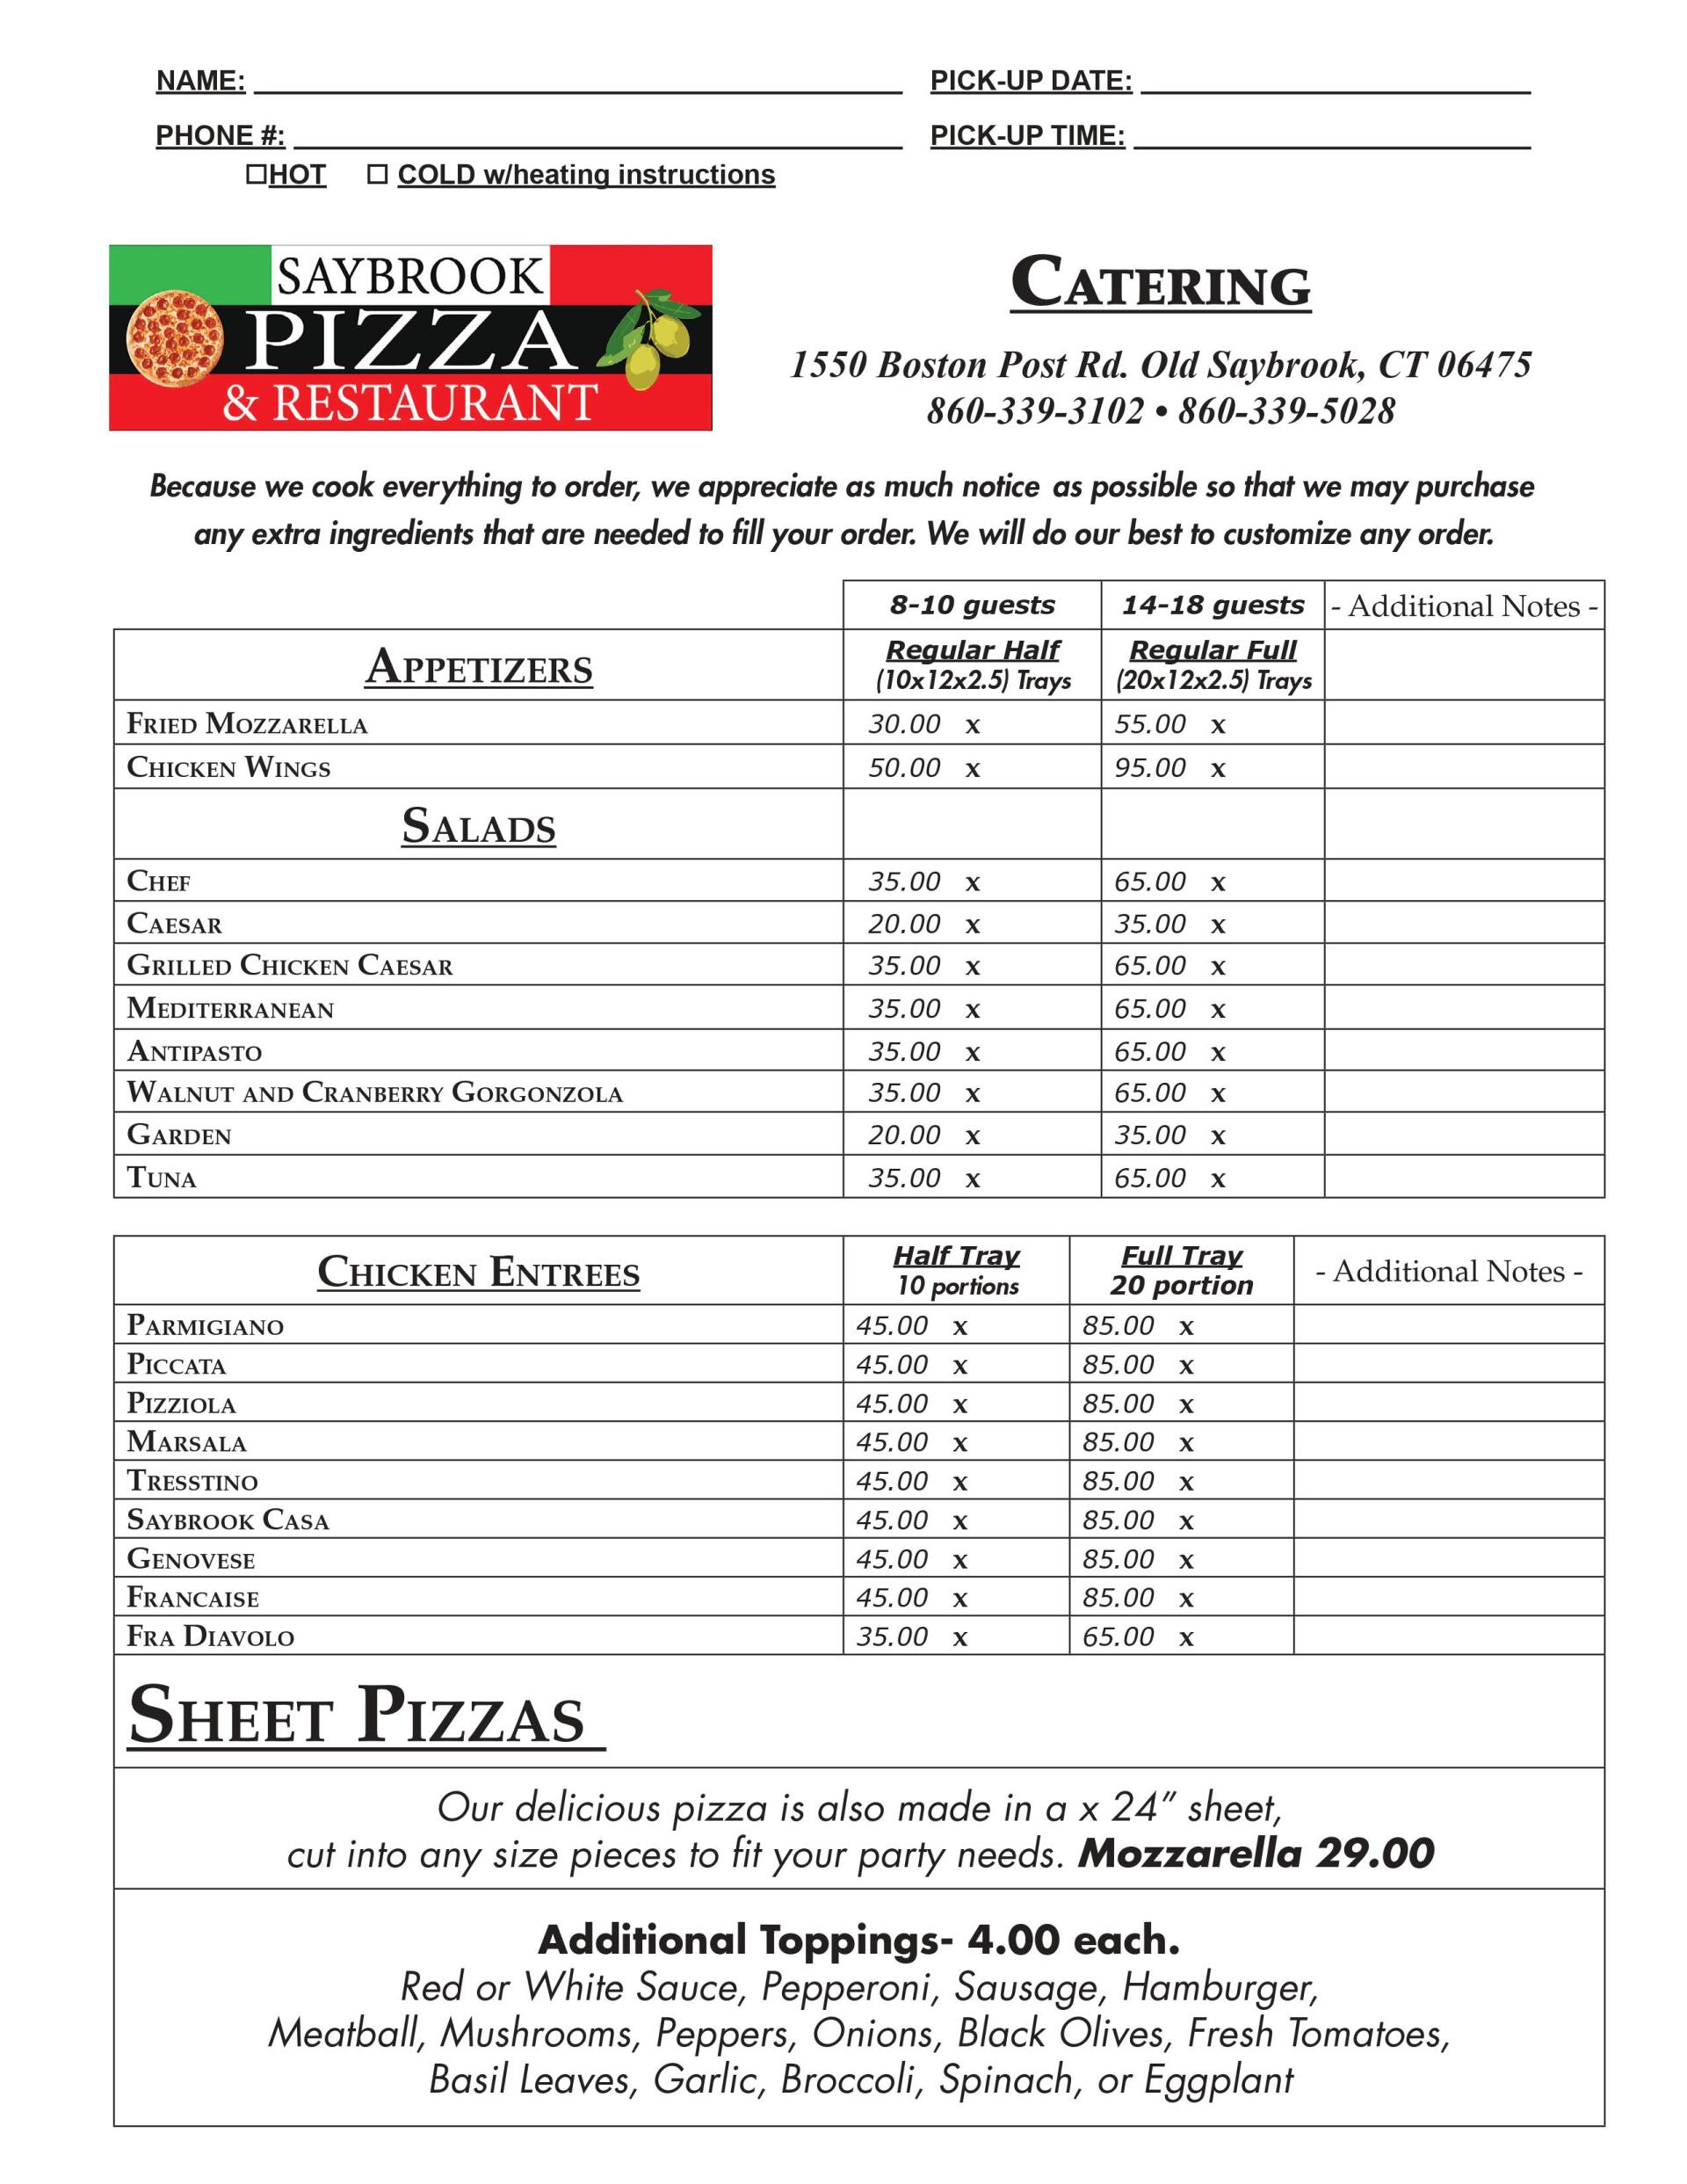 New Catering Menu — Old Saybrook, CT — Saybrook Pizza & Restaurant